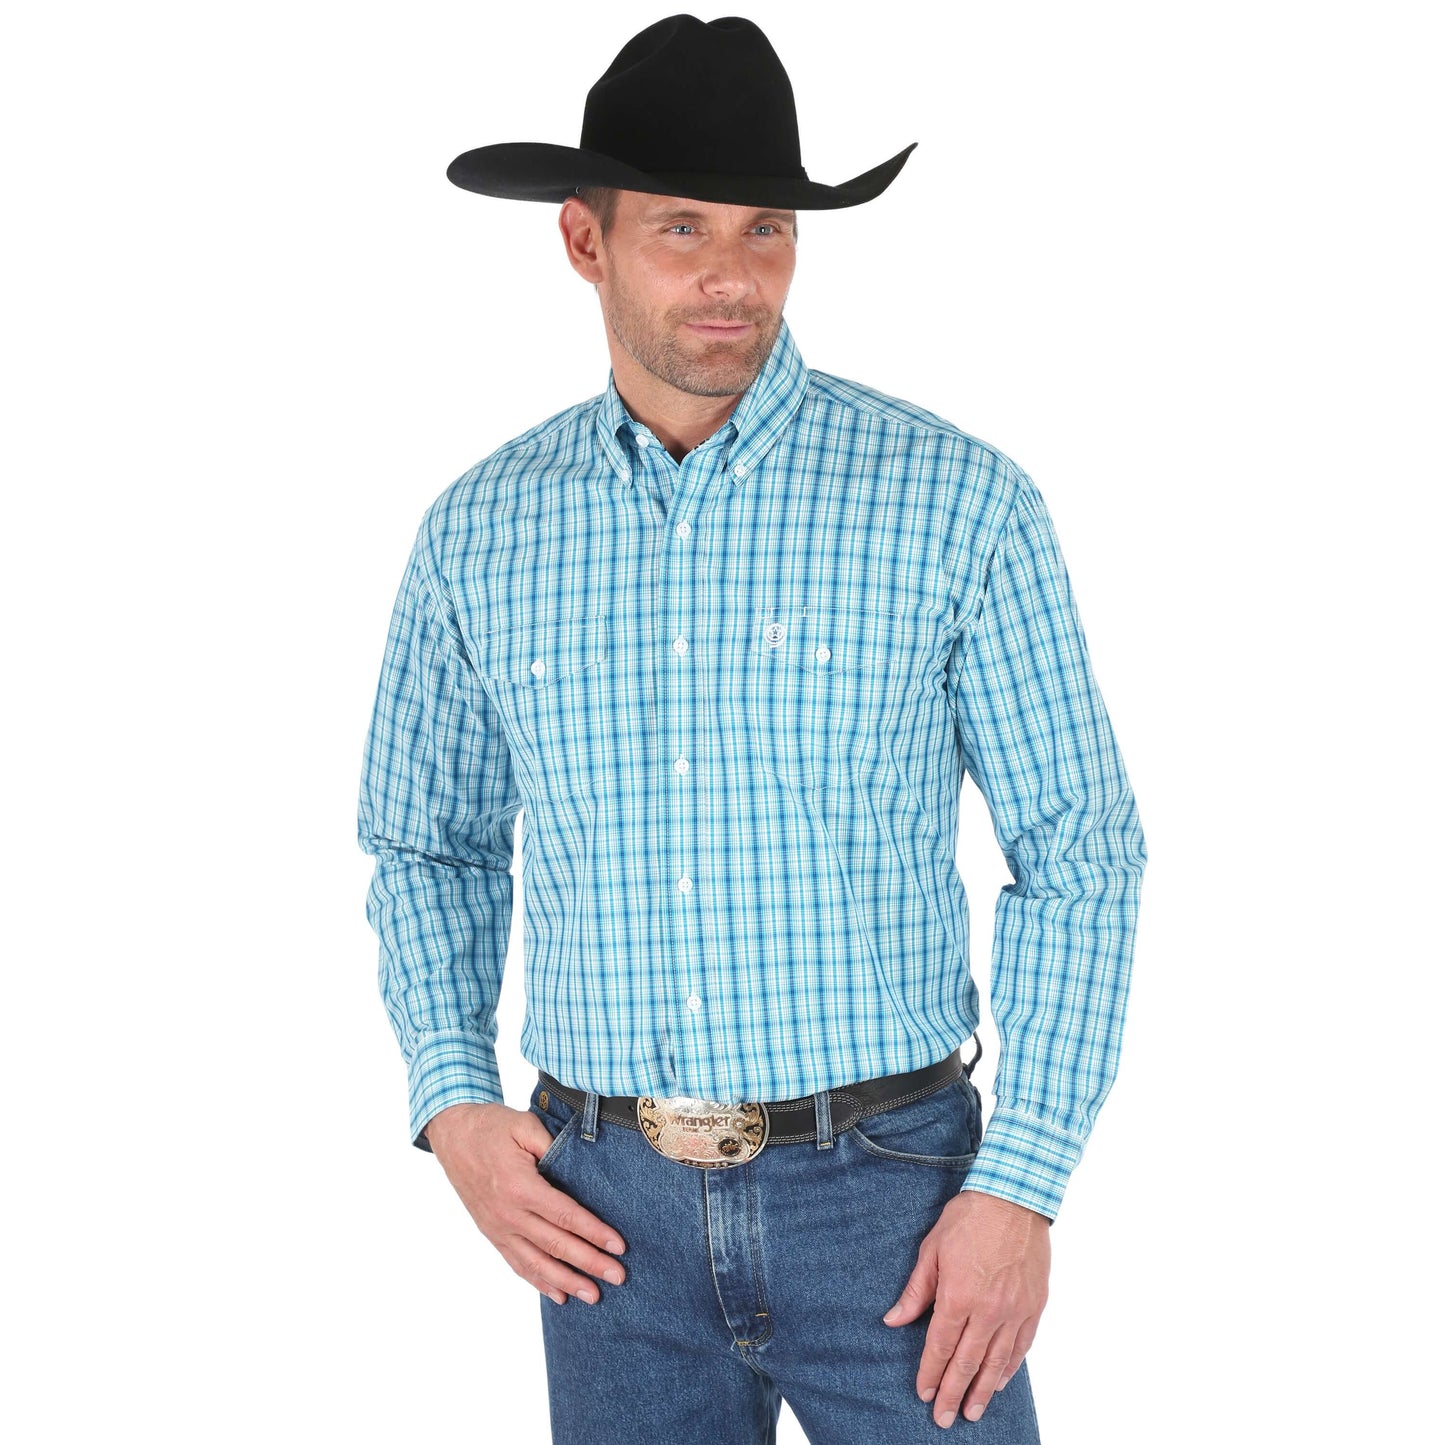 Men's Wrangler George Strait Plaid Shirt L/S Teal